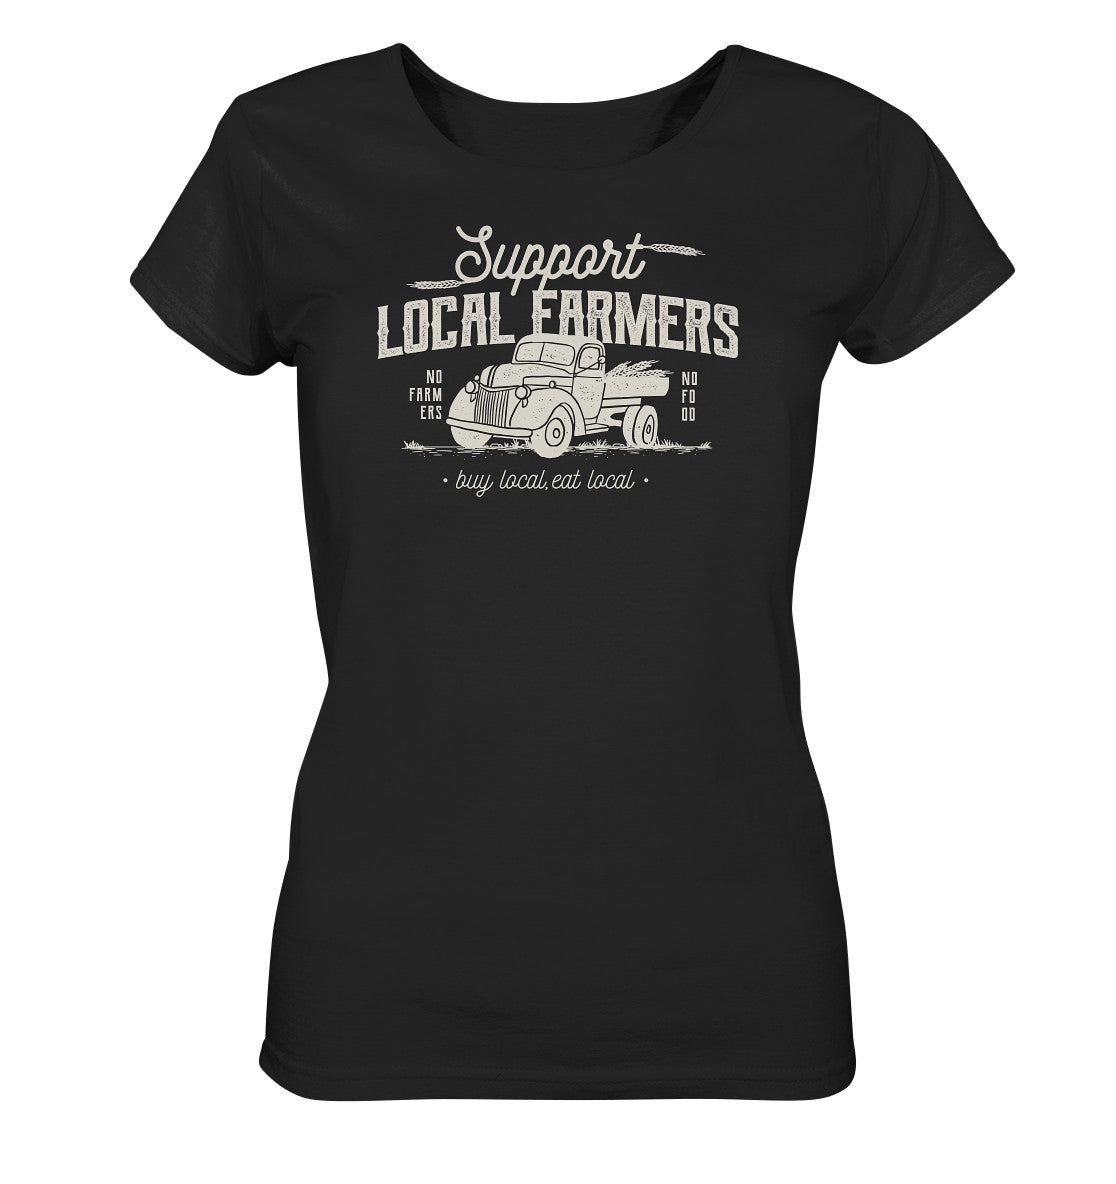 Support local Farmers. Retro Shirt Landwirt. No Farmers no food. Dorfkram® schwarz